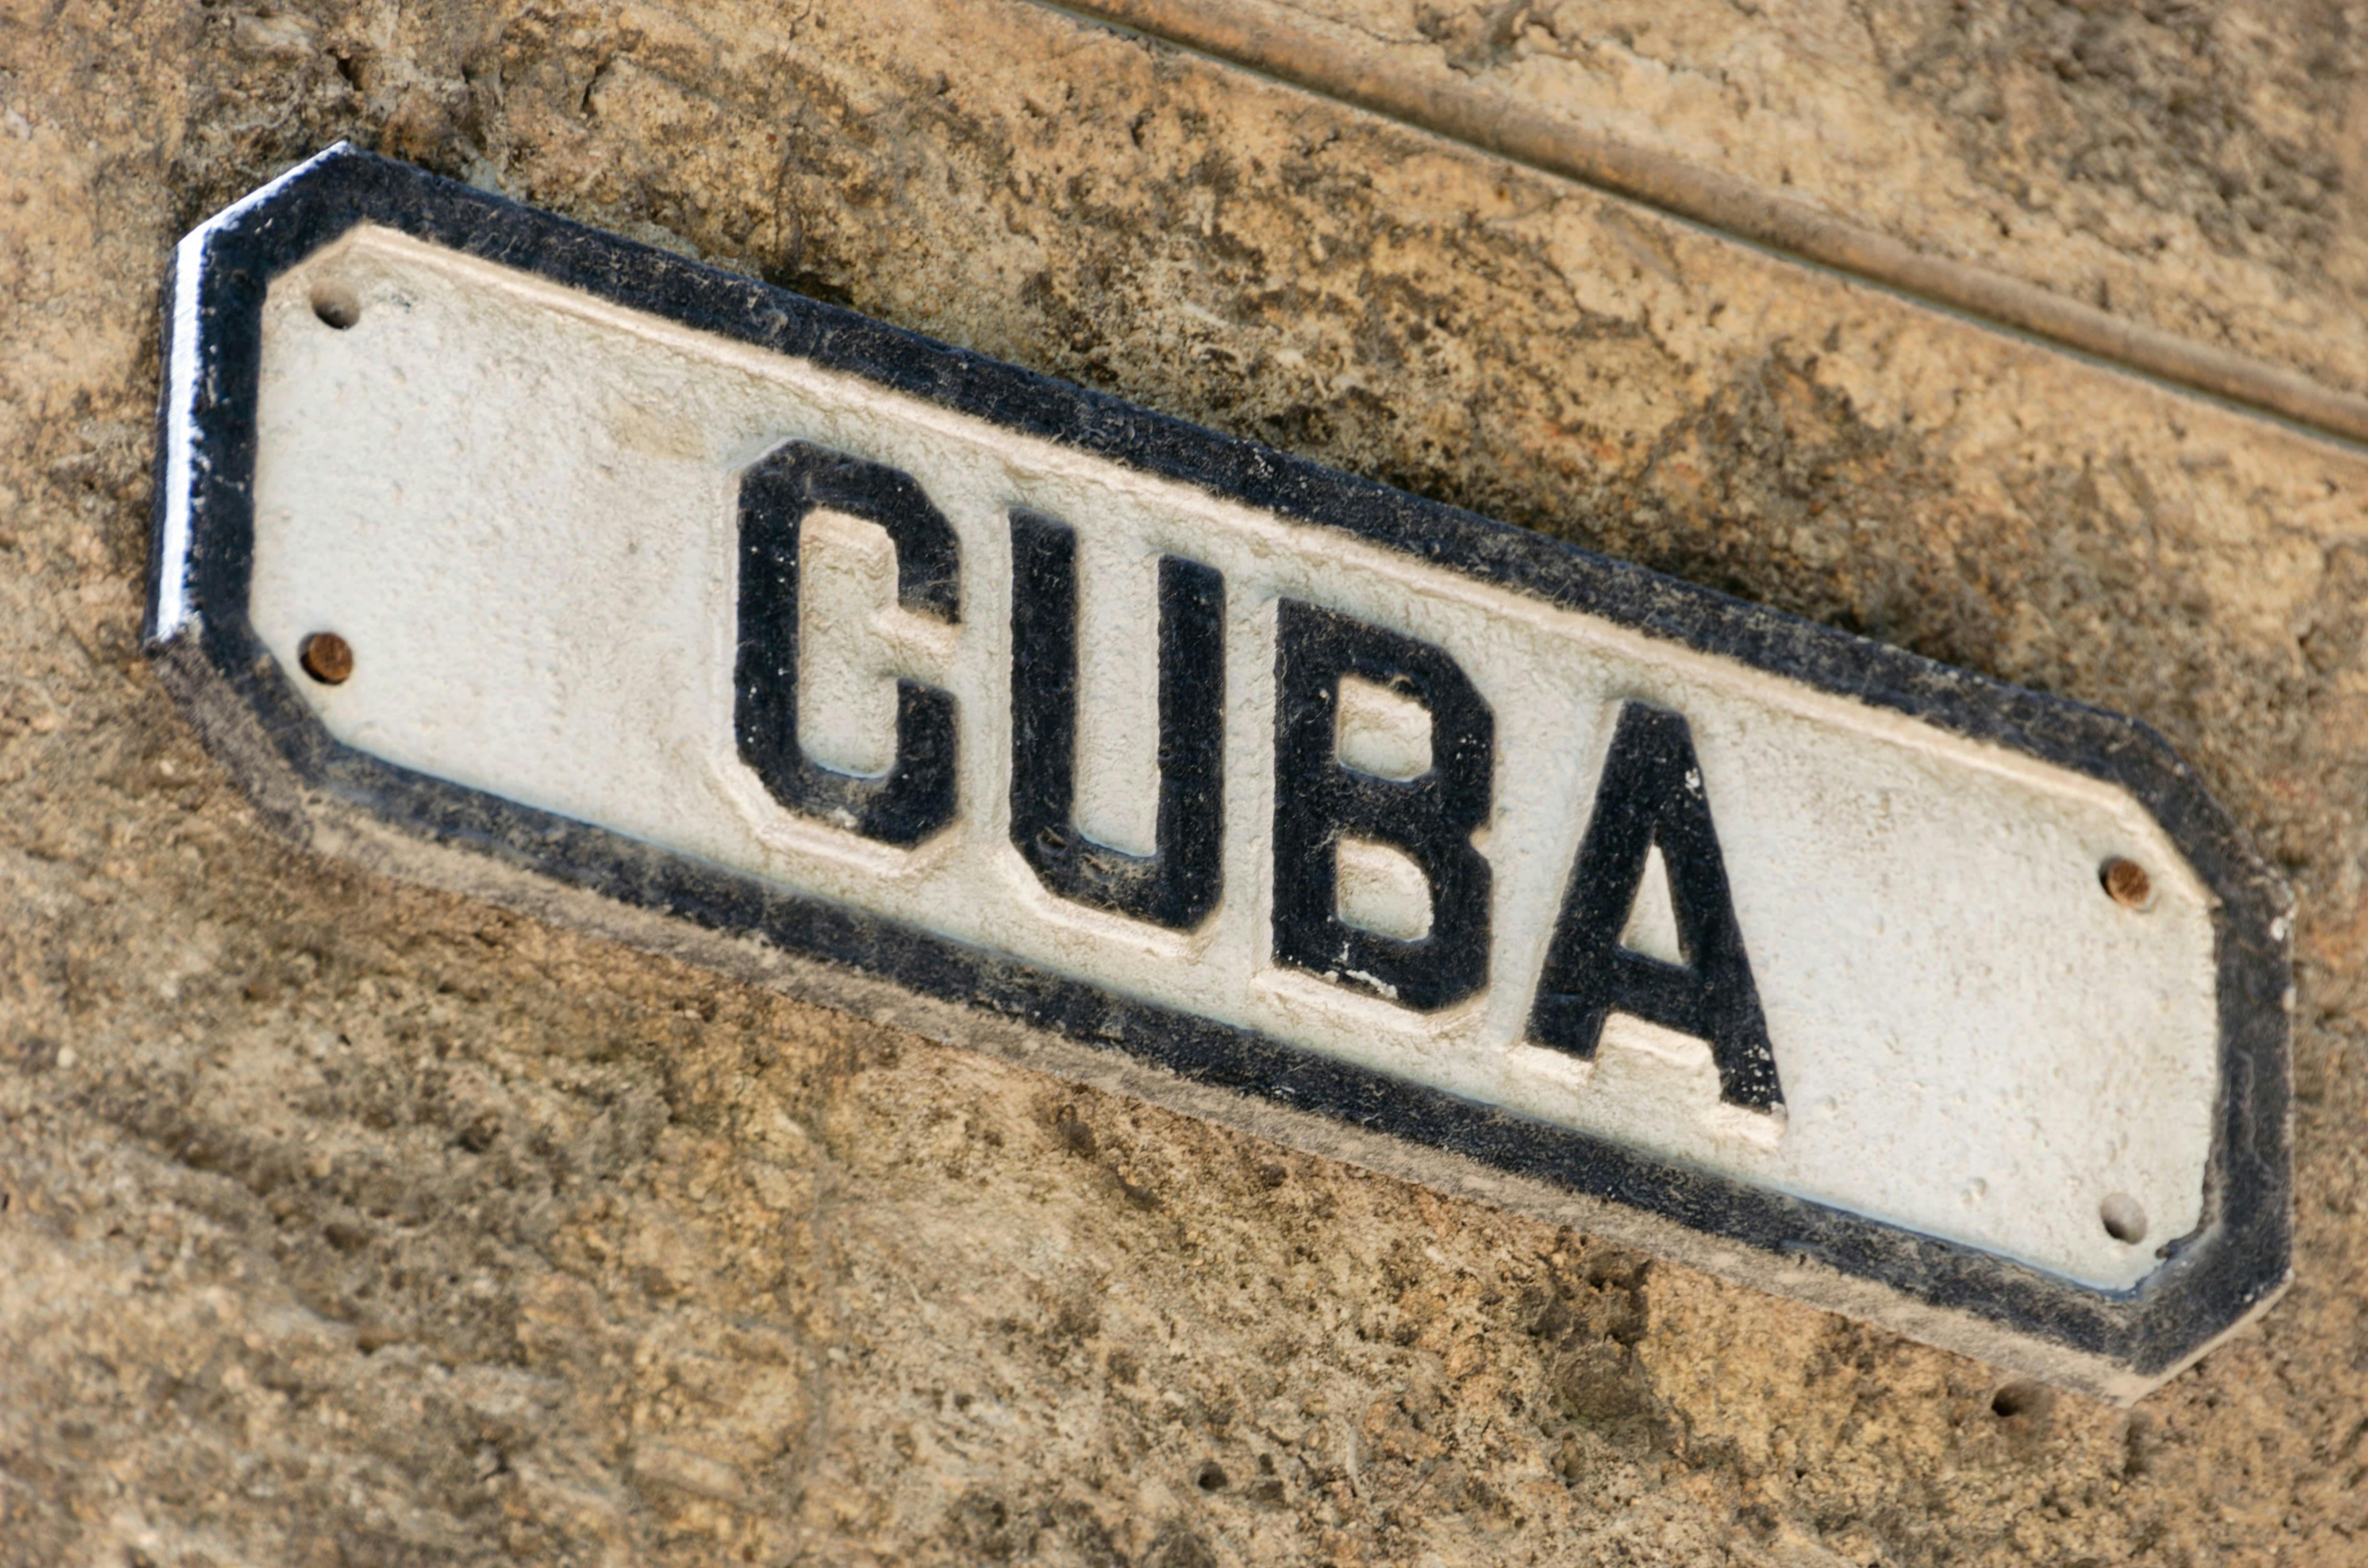 Havana City Tour